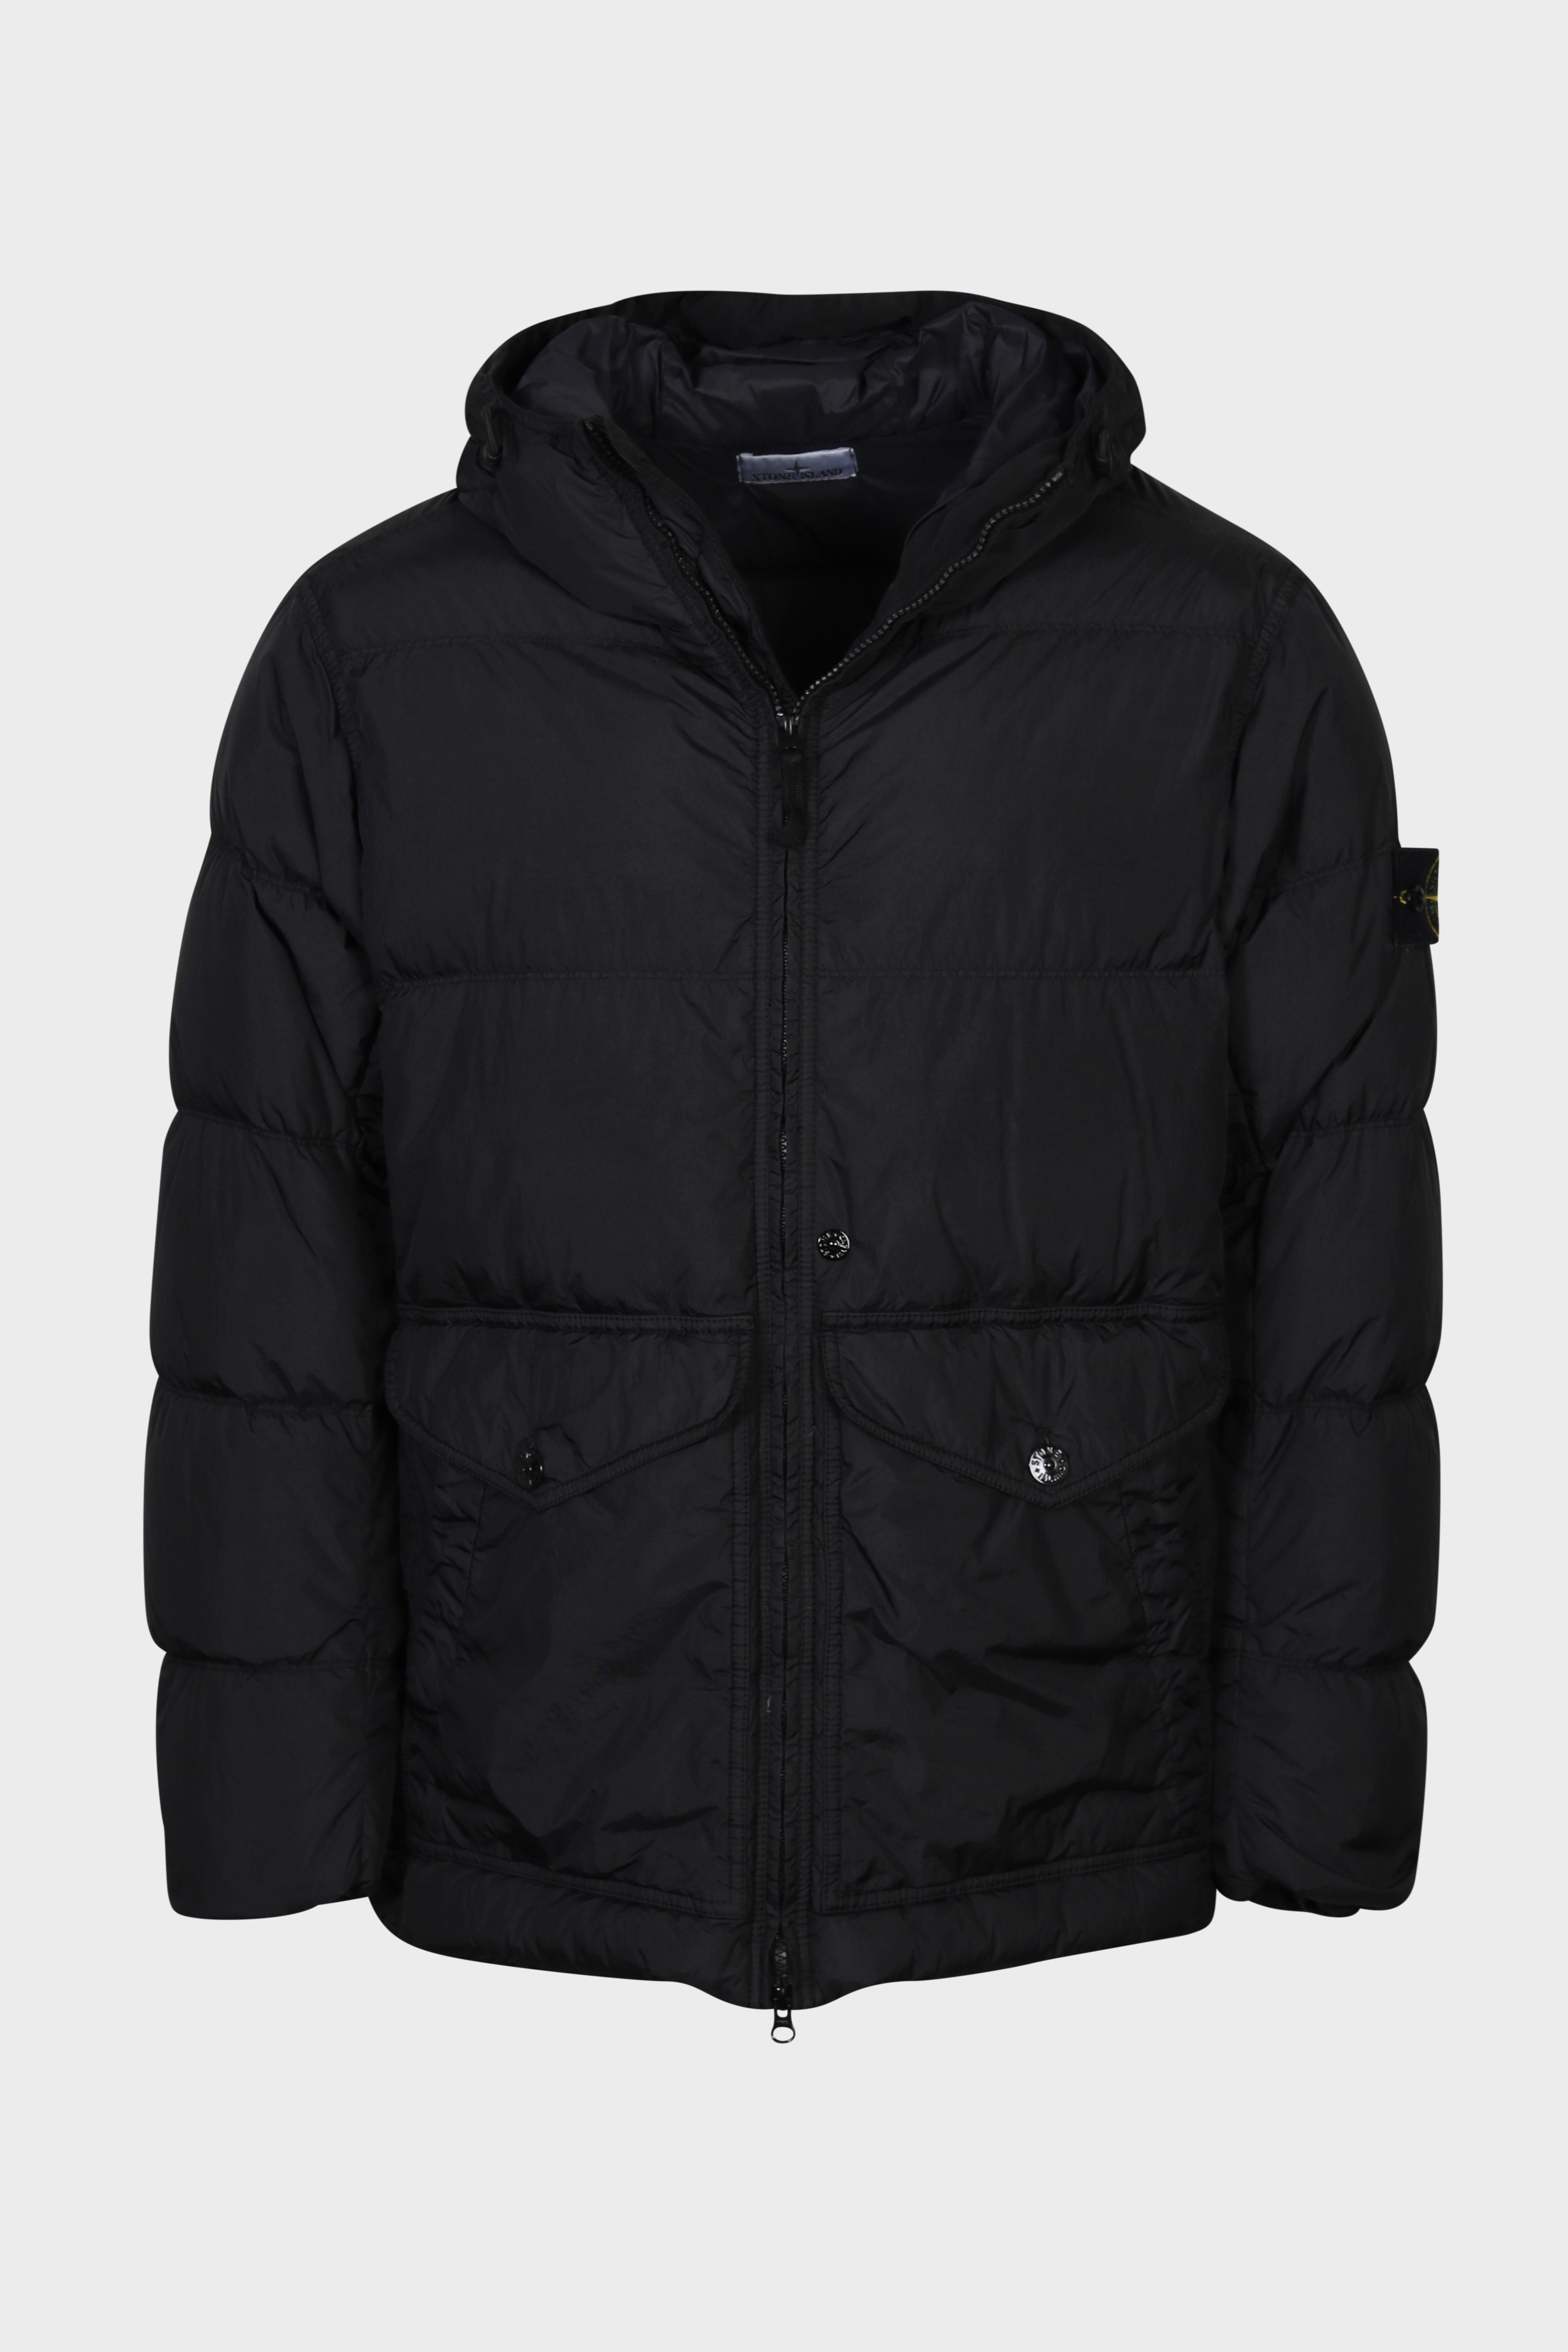 STONE ISLAND Garment Dyed Crinkle Reps Hooded Down Jacket in Black